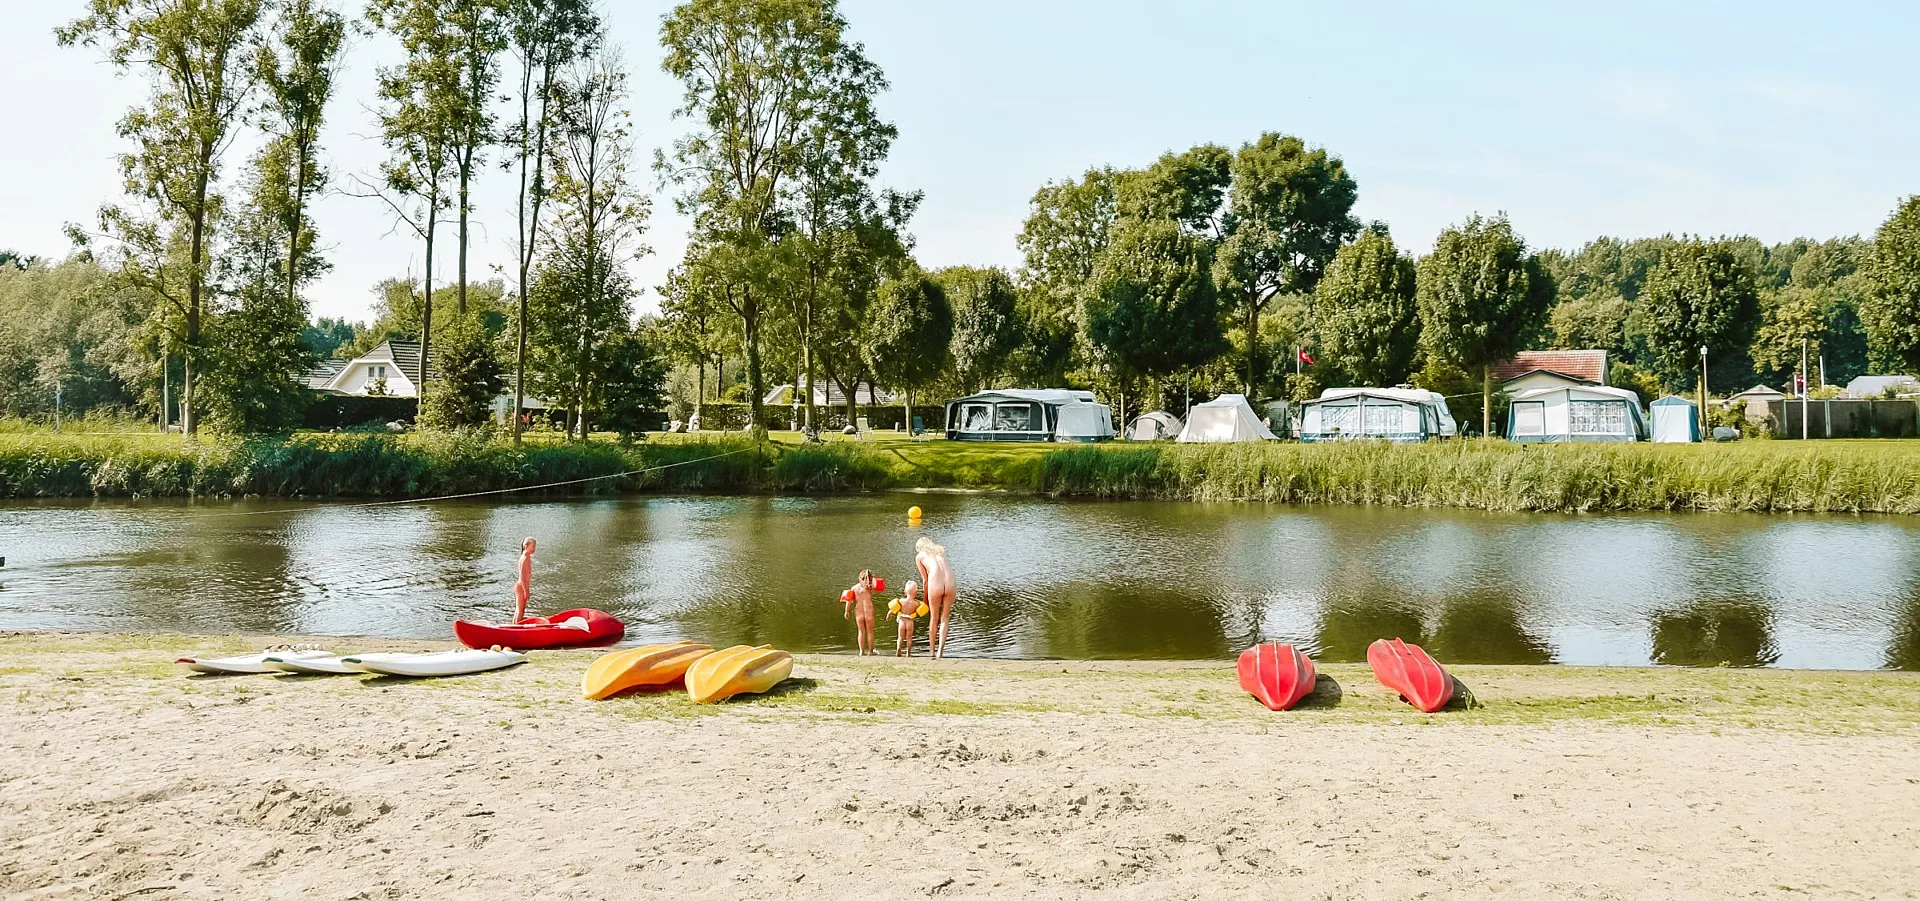 Naturist camping Netherlands 2